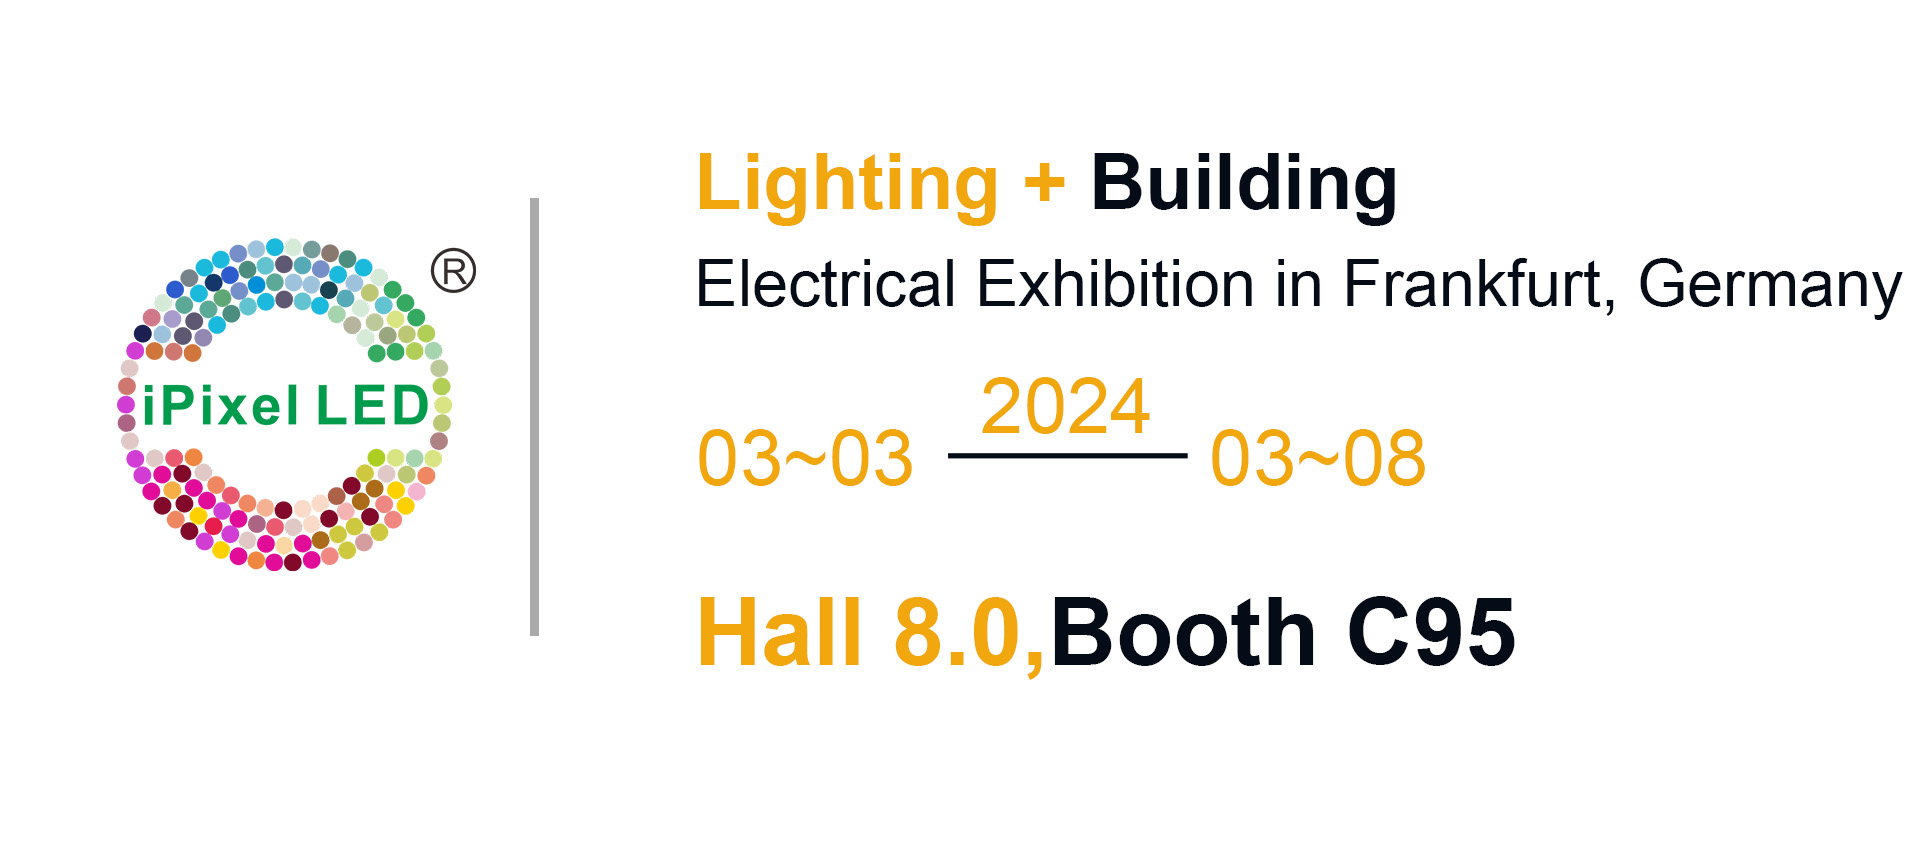 Lighting + Building Electrical Exhibition in Frankfurt, Germany